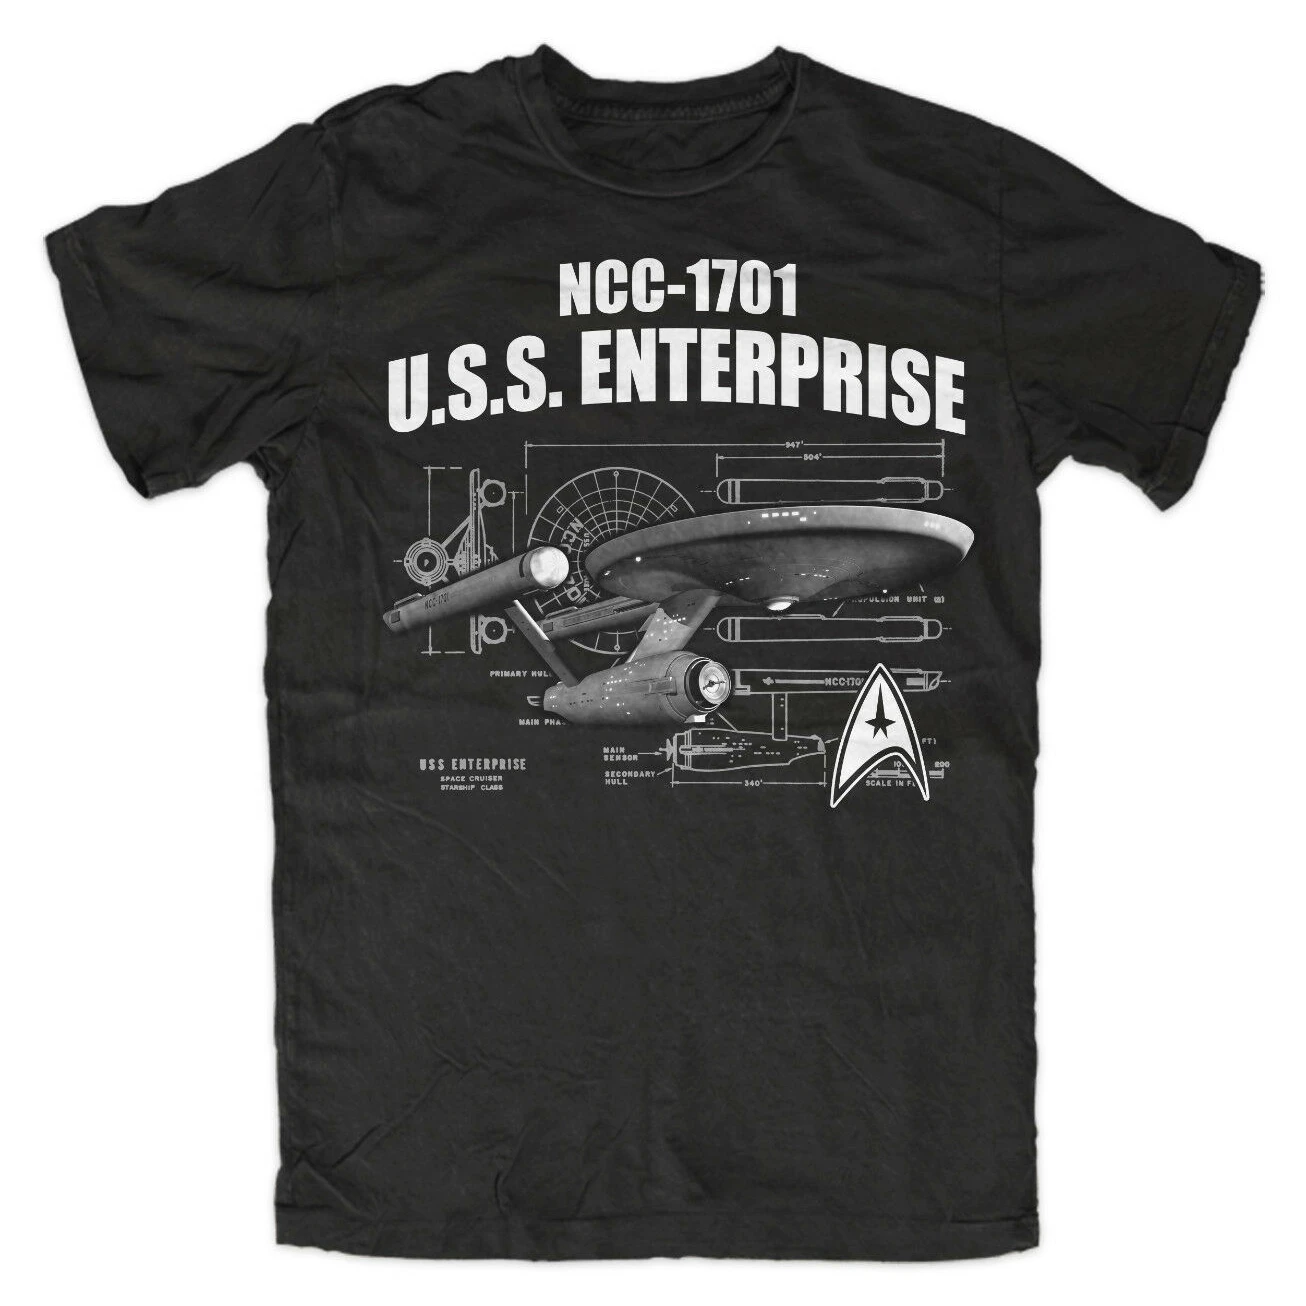 Camiseta NCC-1701 USS Enterprise Star,Kult,Fun,Trek,Spock,Movie,Tv,Kirk,Picard,Uhura,Crusher